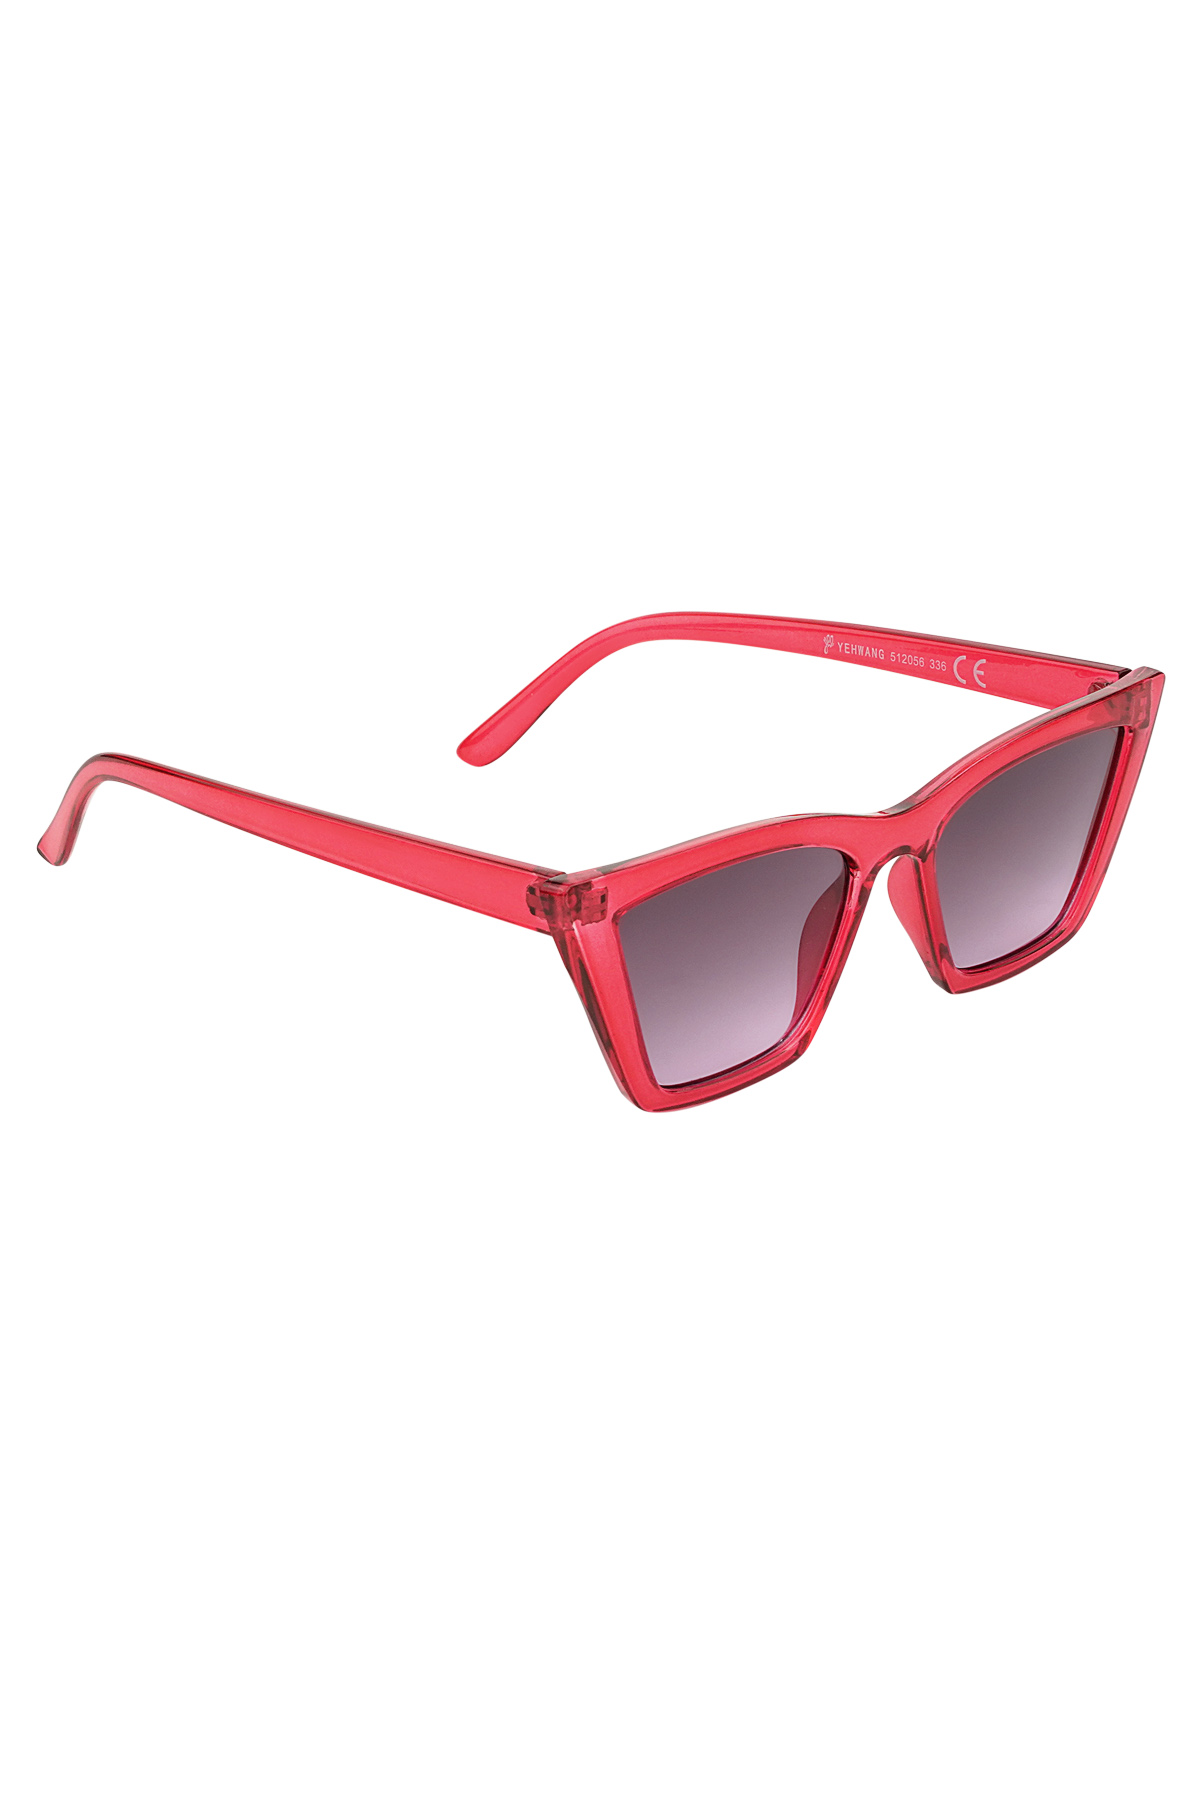 Monochrome cat eye sunglasses - red h5 